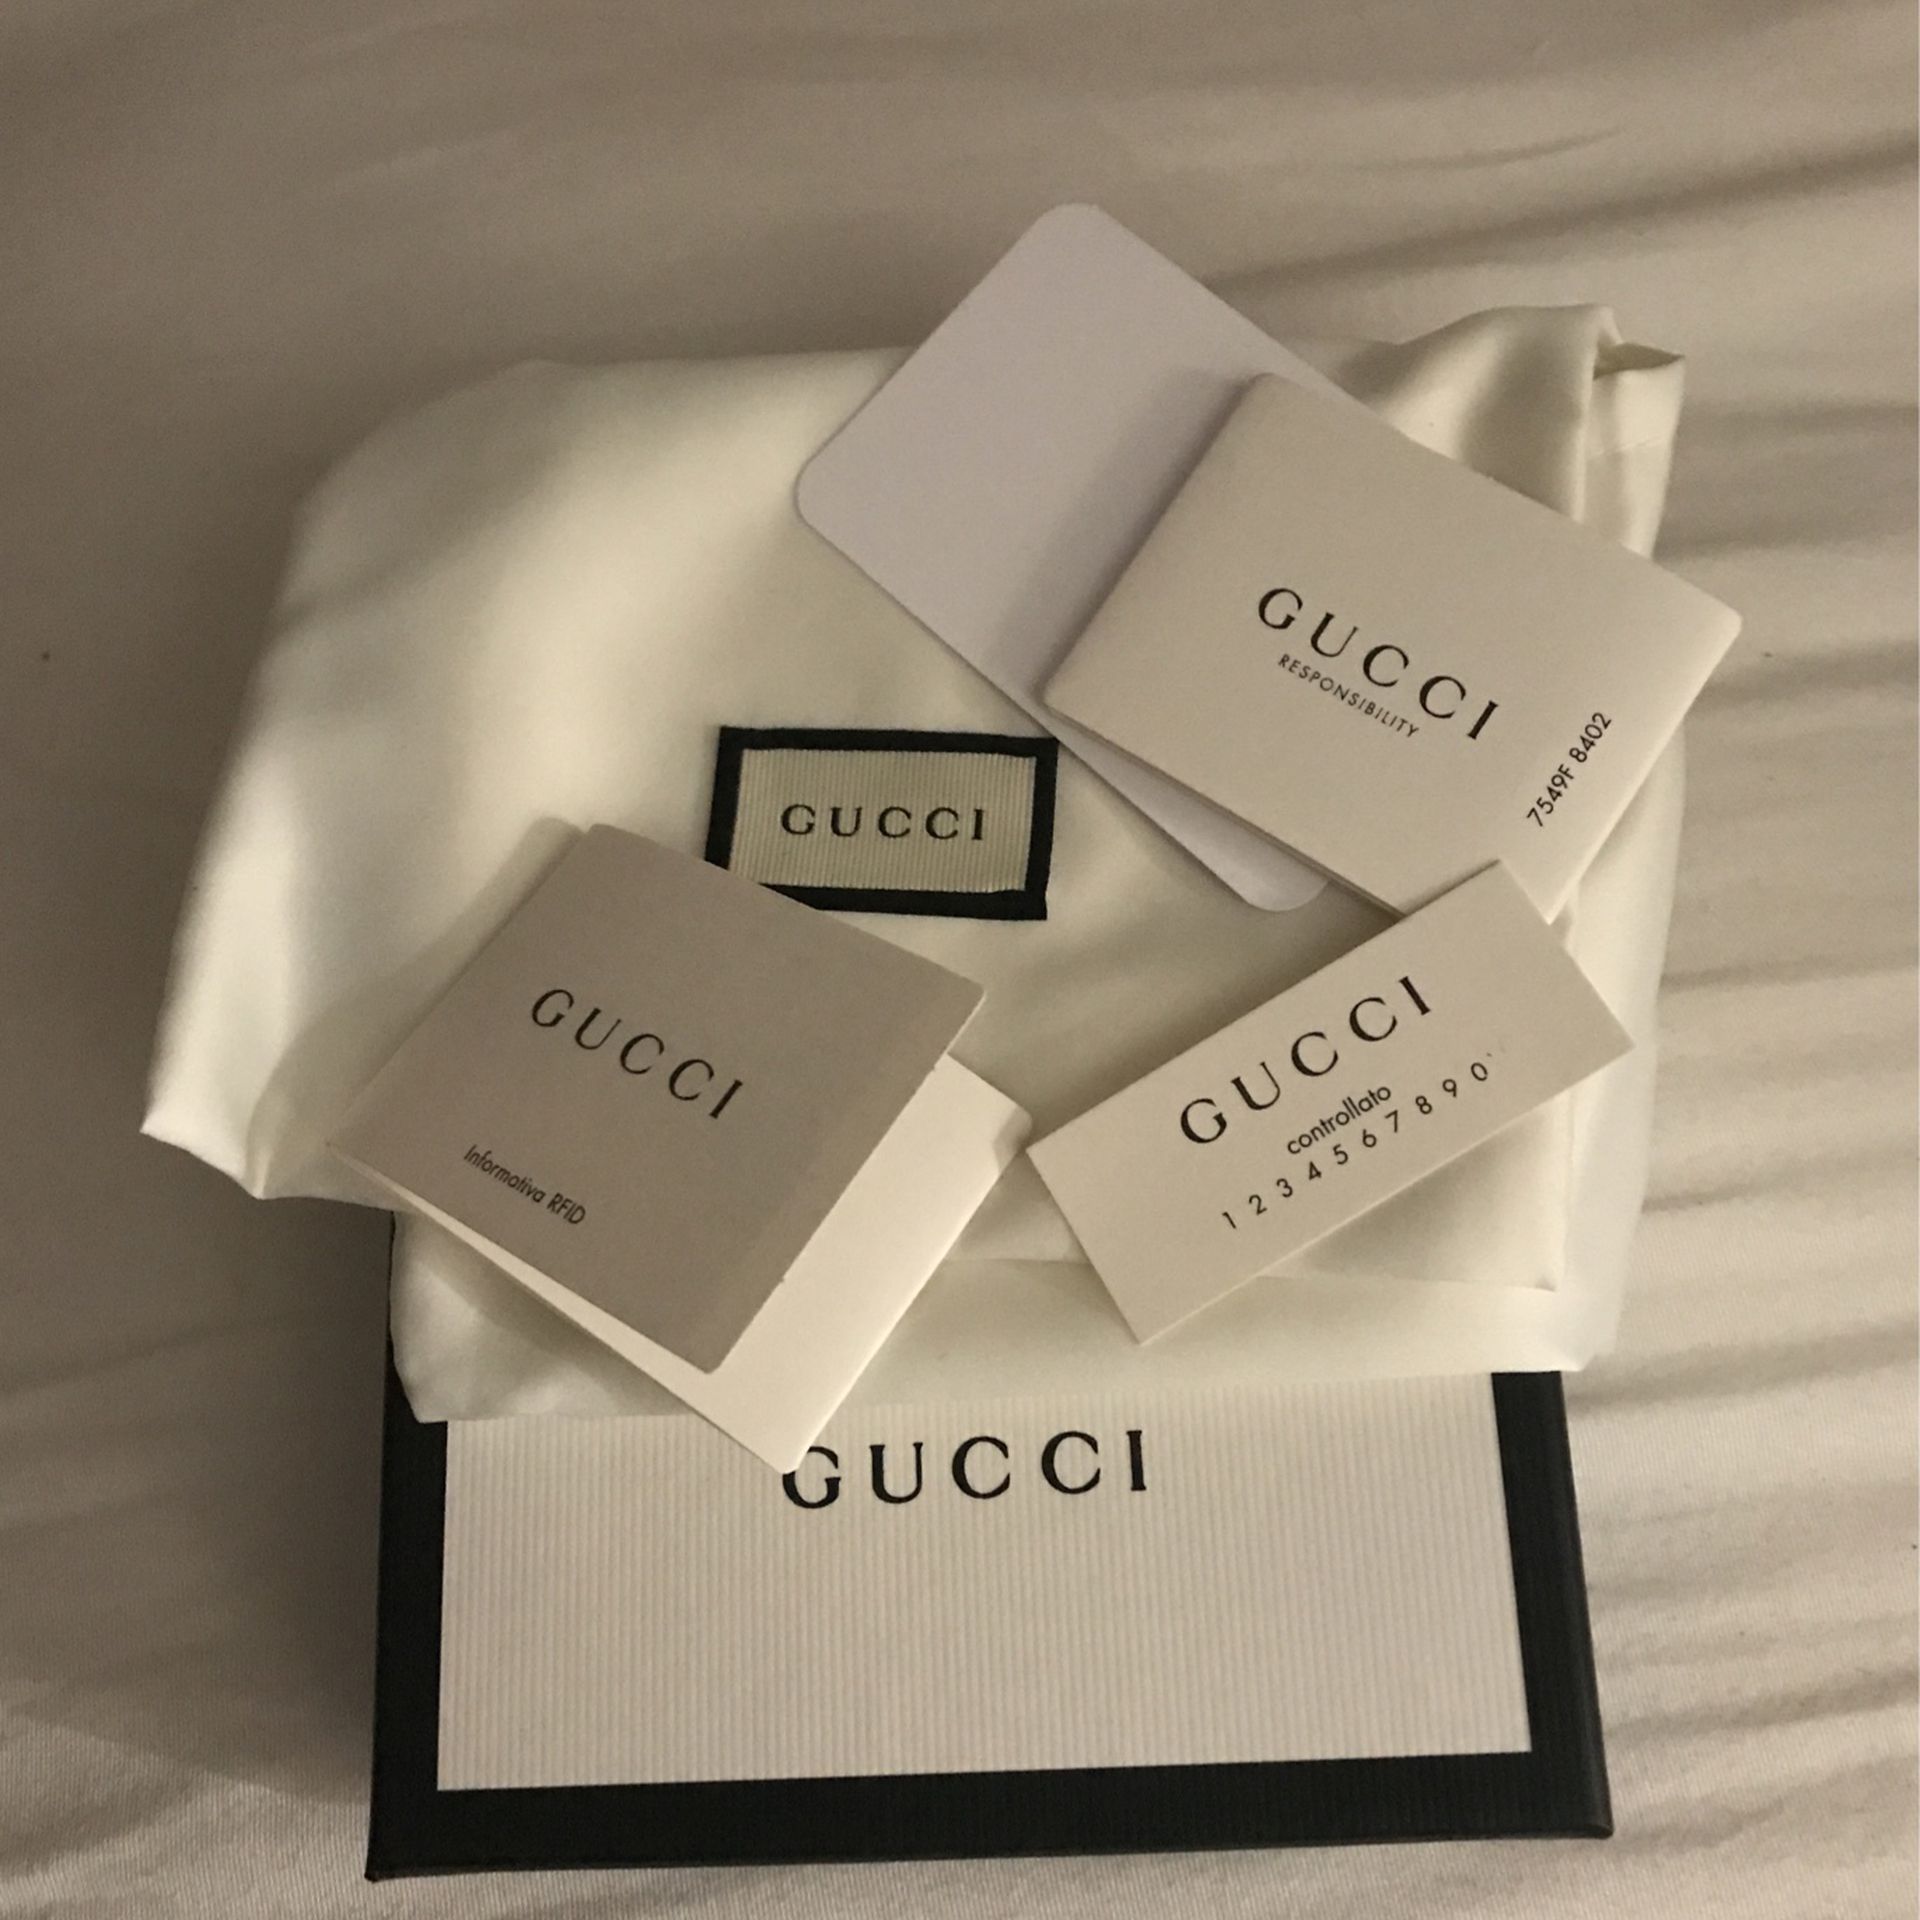 Original Gucci Wallet Box With Tags 